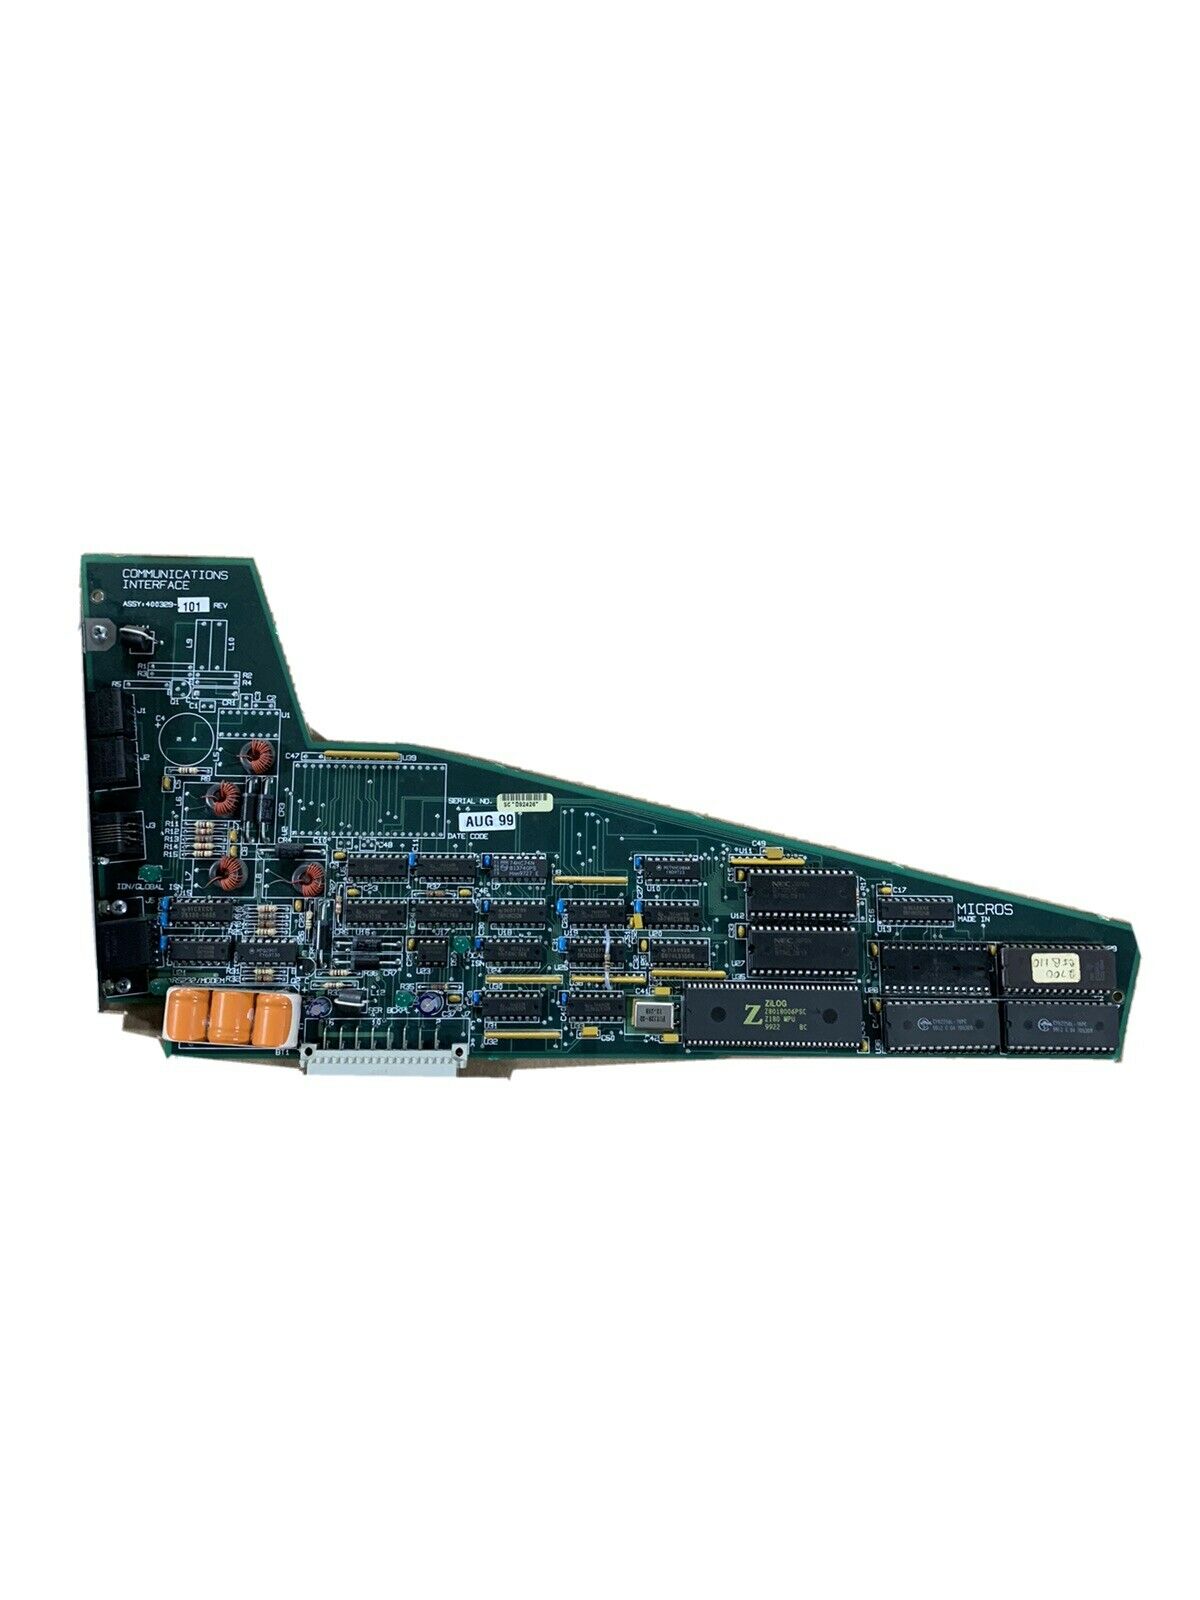 Micros 2400/2700 Cib Board (micros Pn 400329)